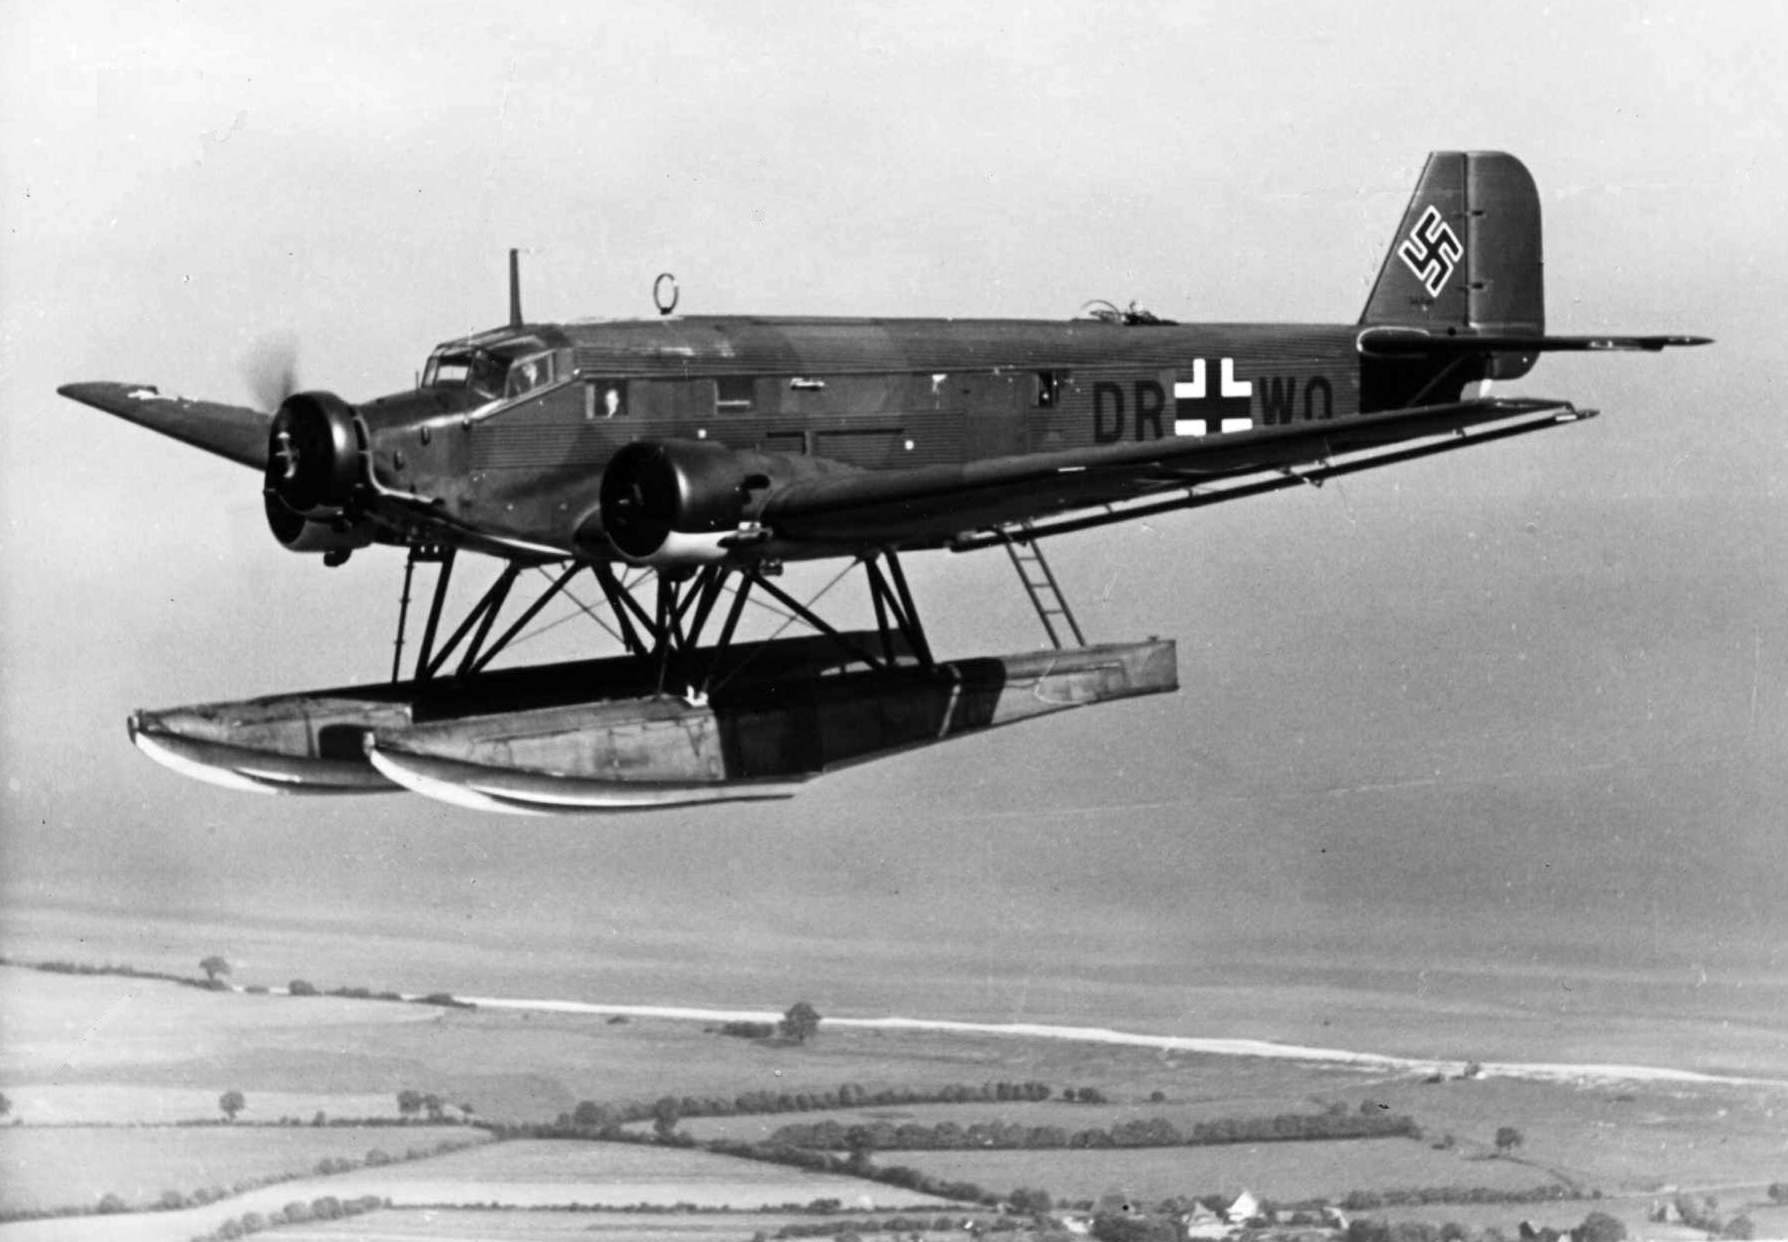 Junkers Ju 52 HD wallpapers, Desktop wallpaper - most viewed